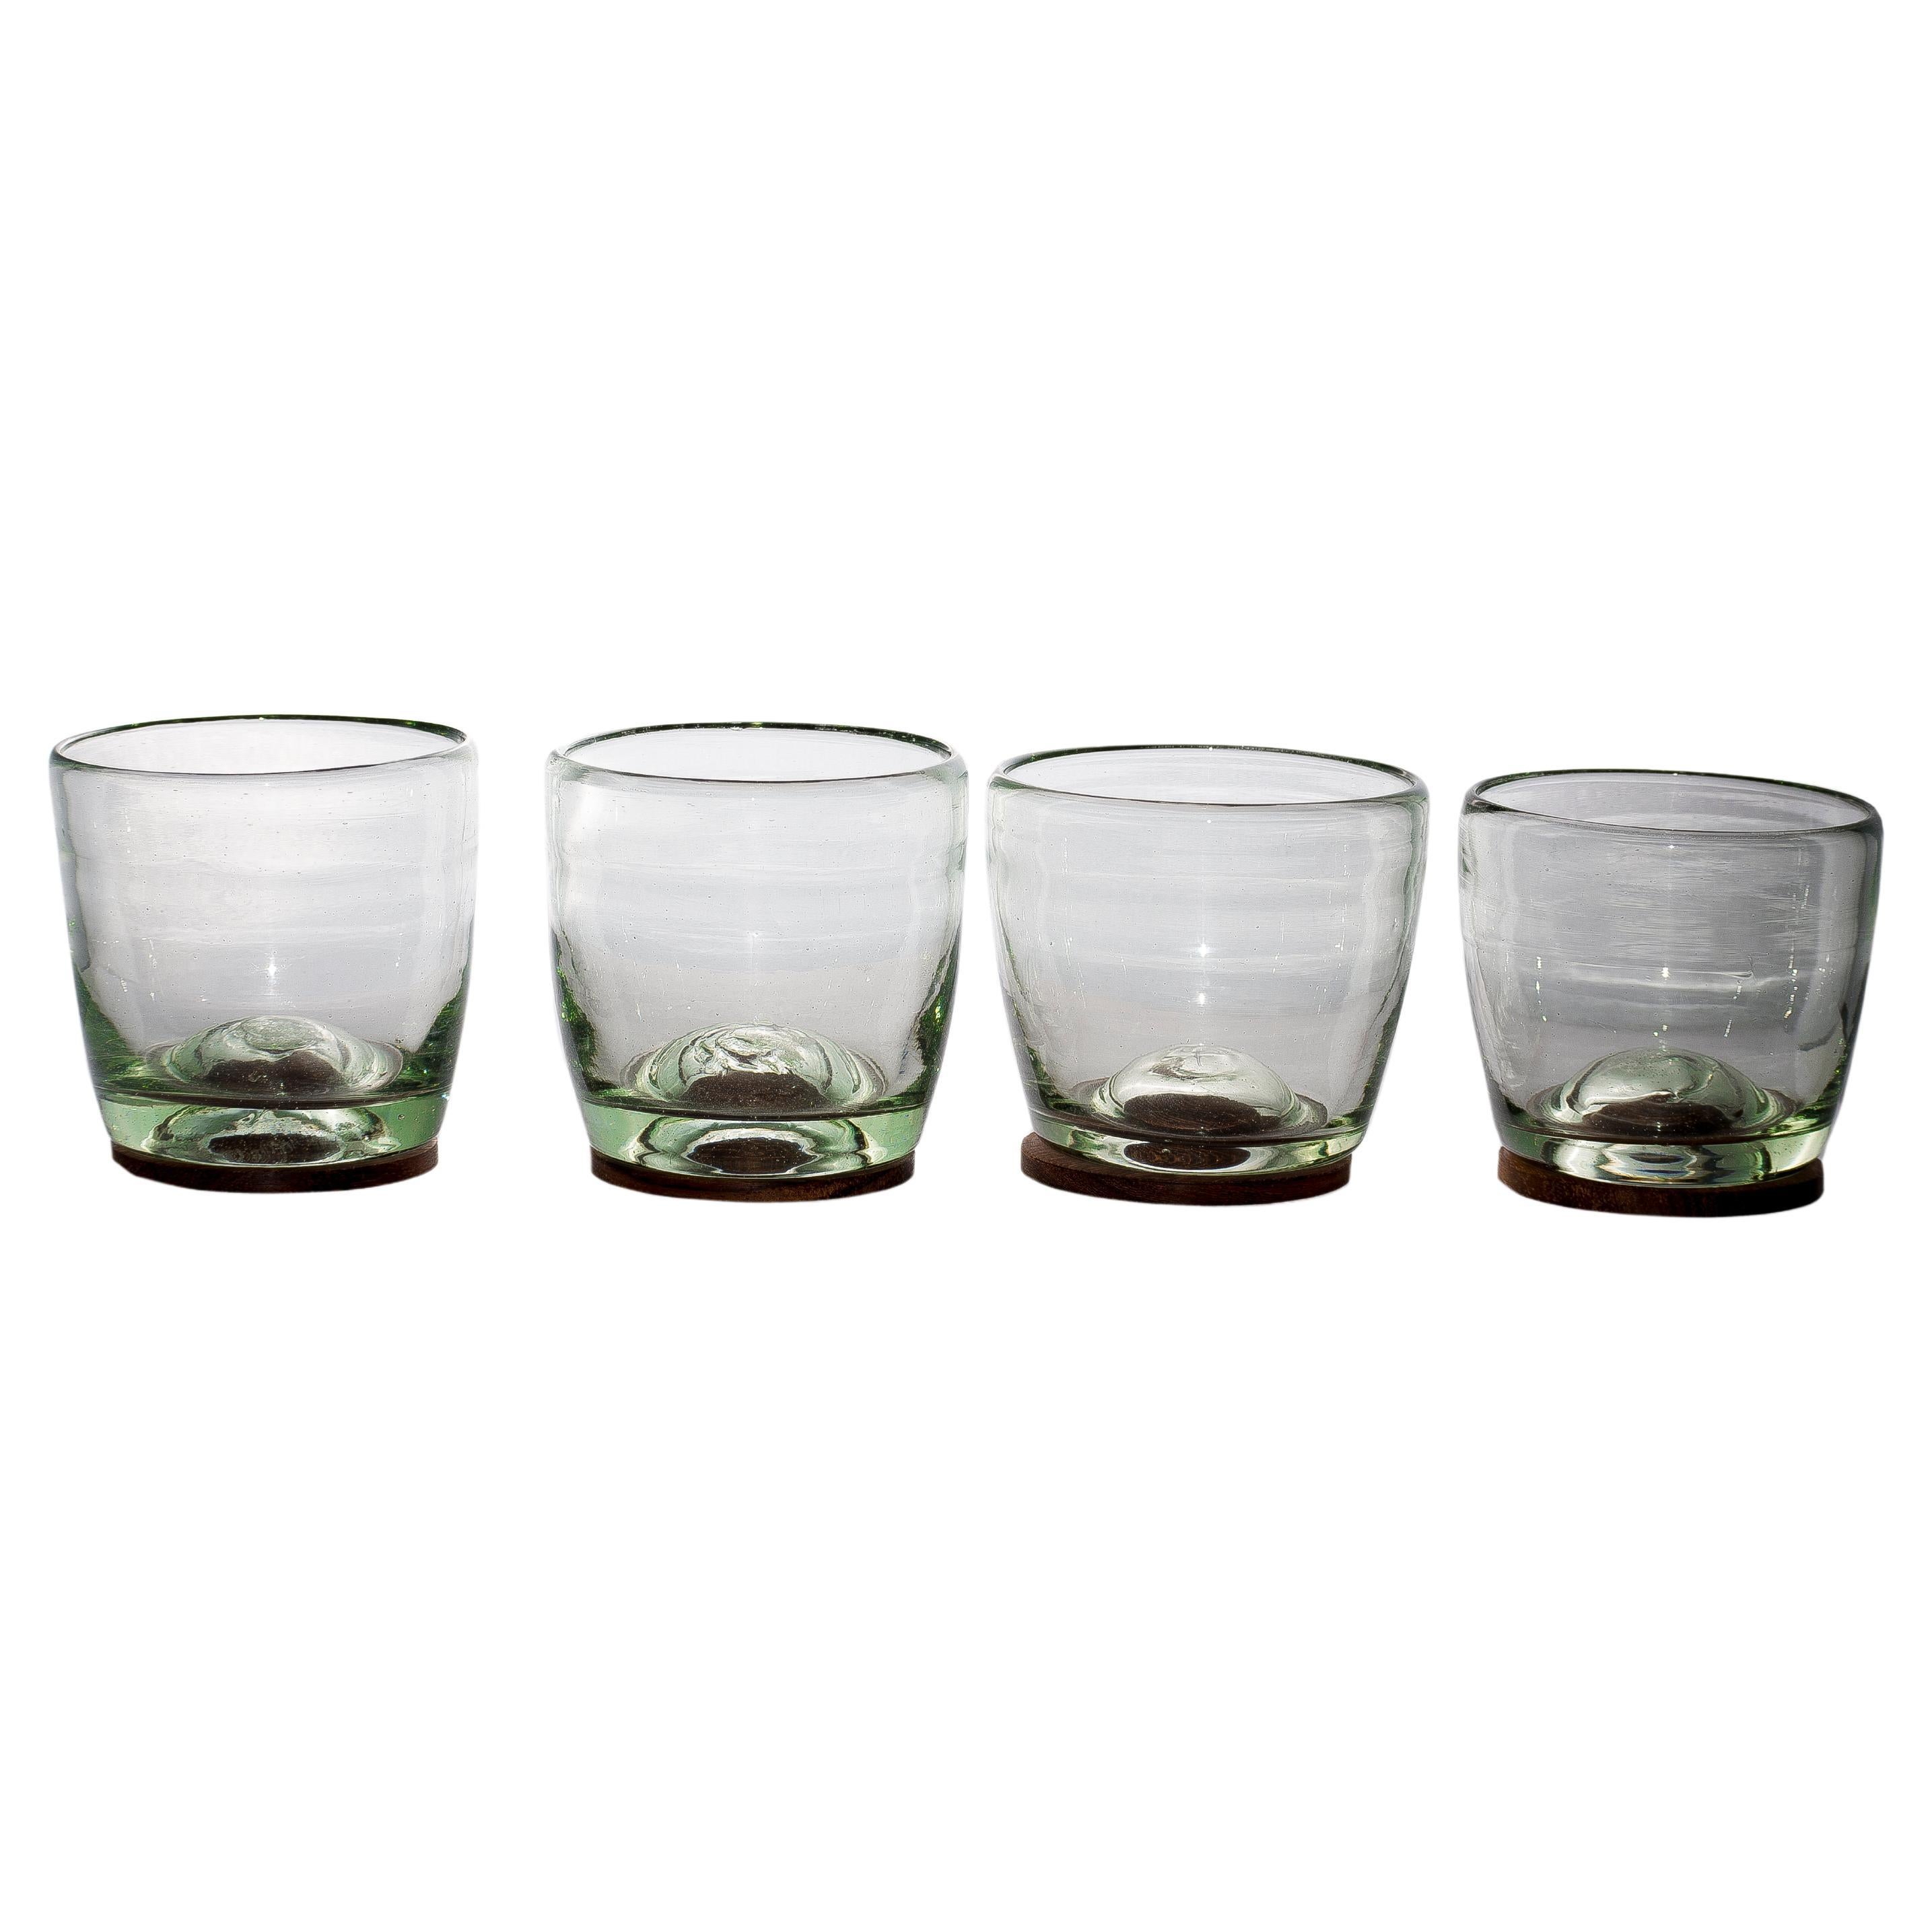 4 Piece Set of Transparent Hand Blown Glasses with Parota Wood Coasters